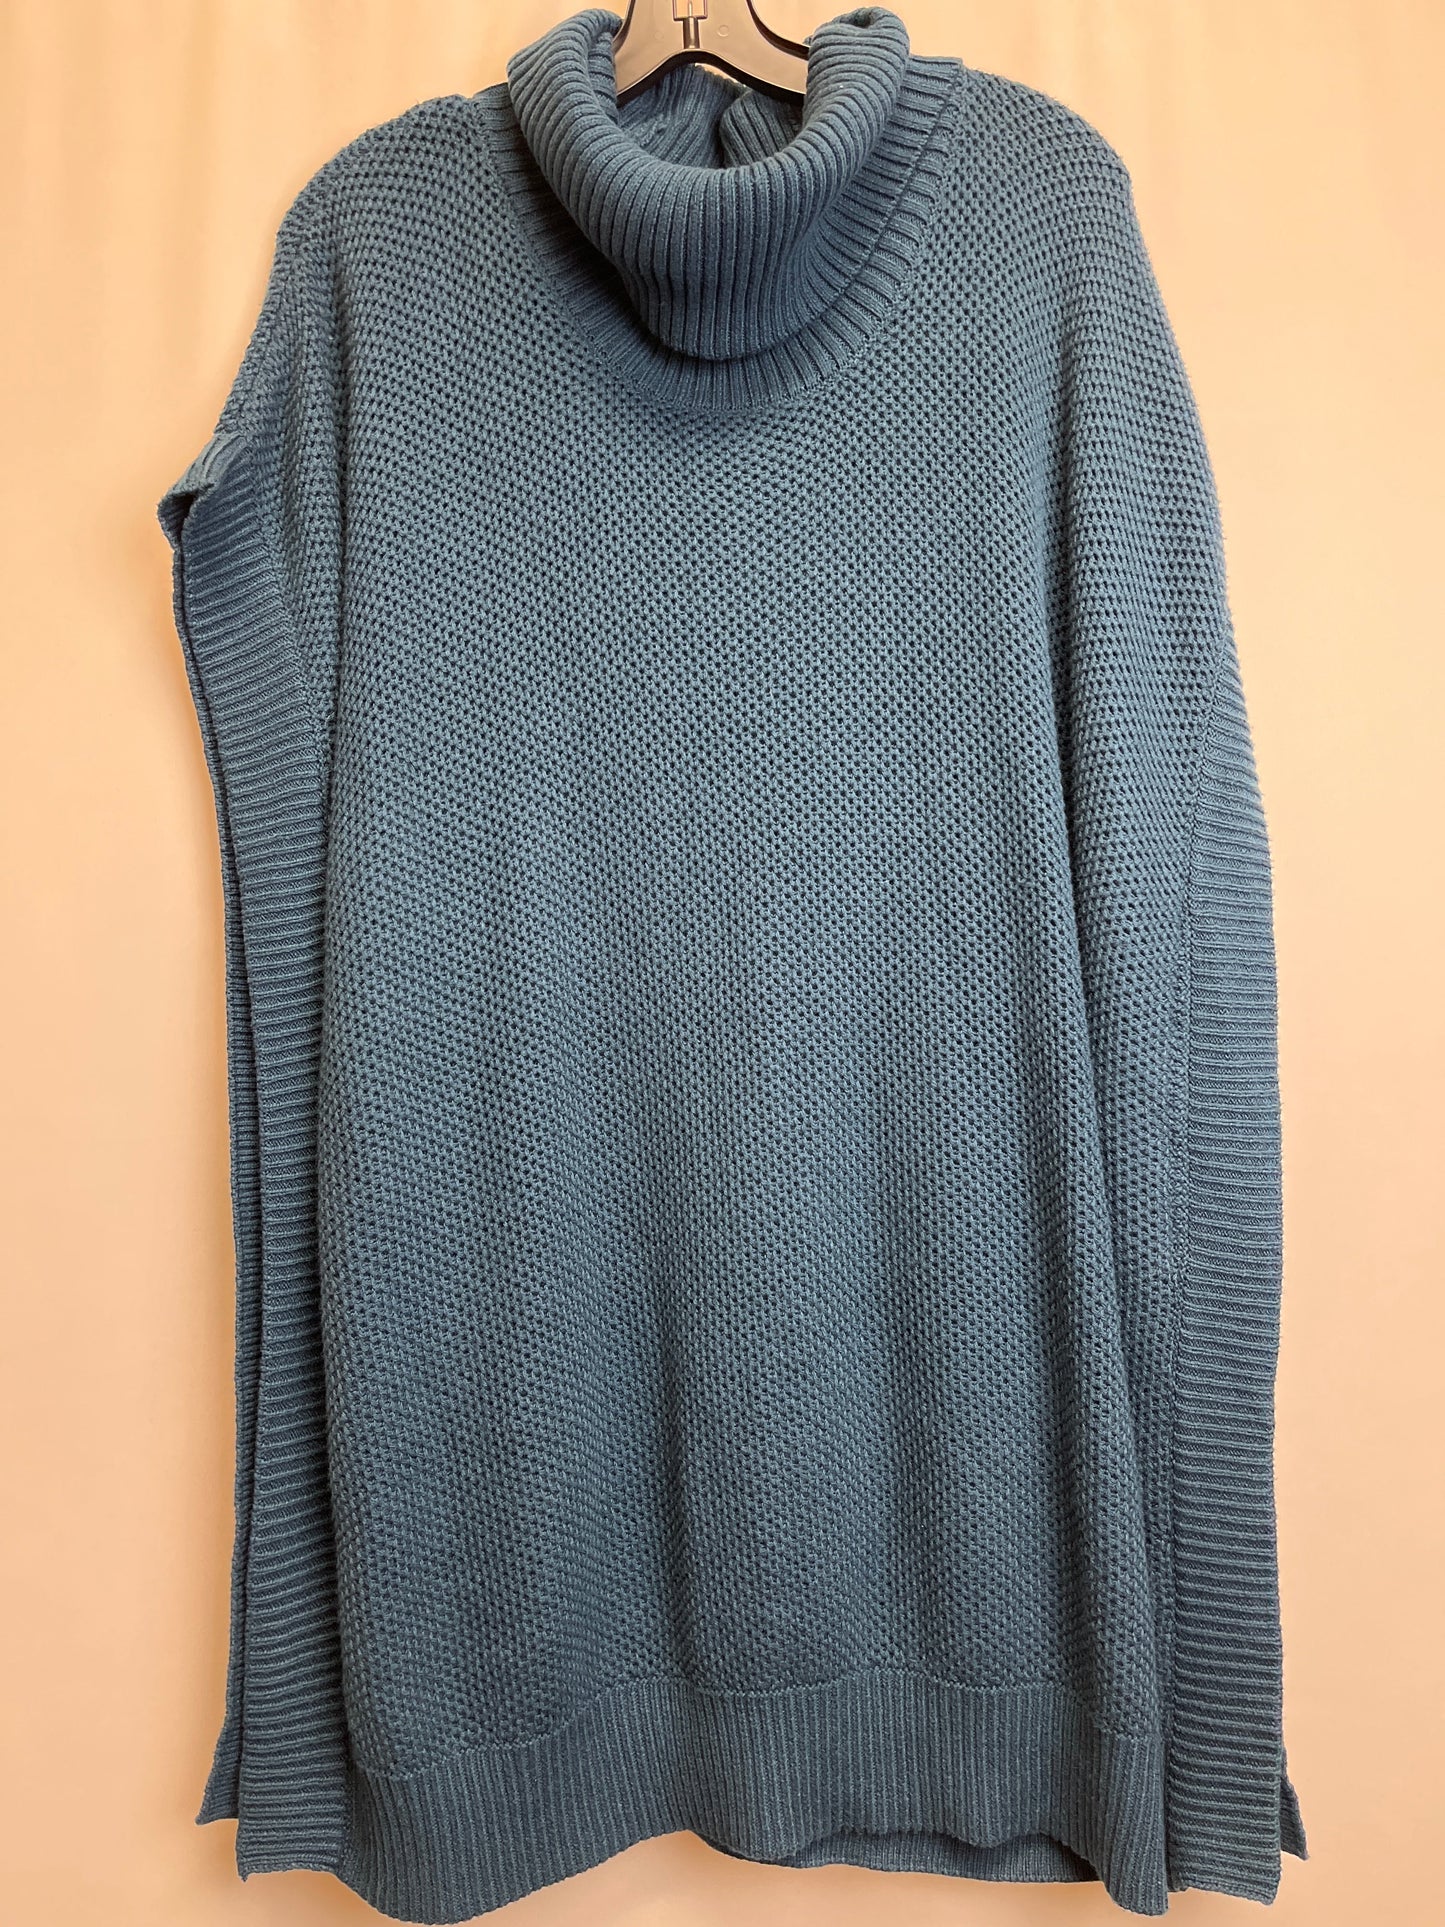 Sweater Short Sleeve By Matilda Jane  Size: L